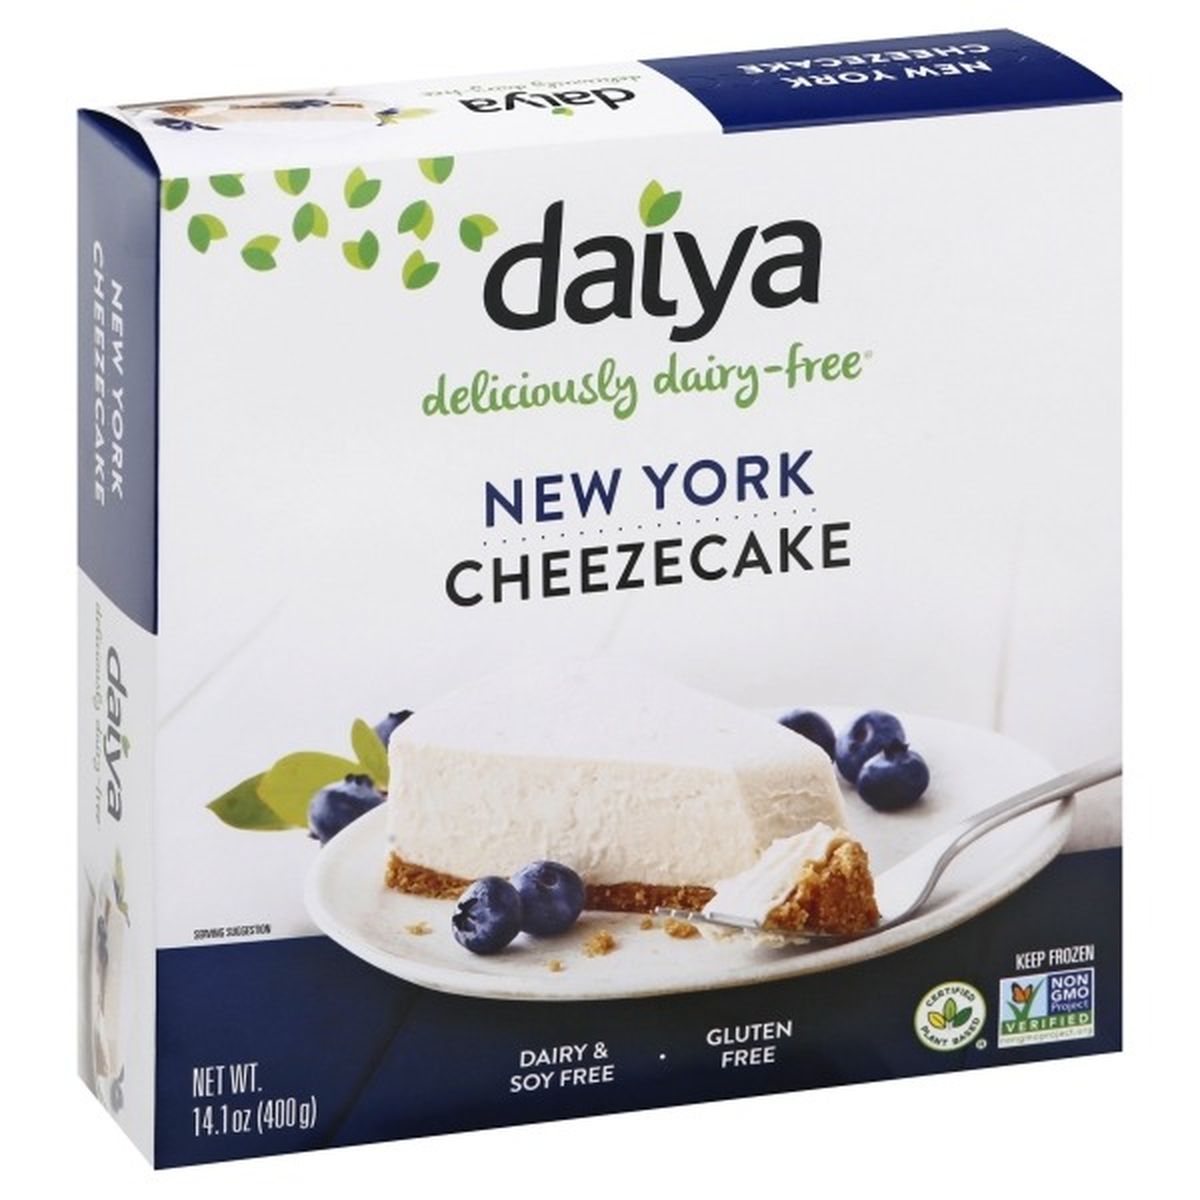 Calories in Daiya Cheezecake, New York